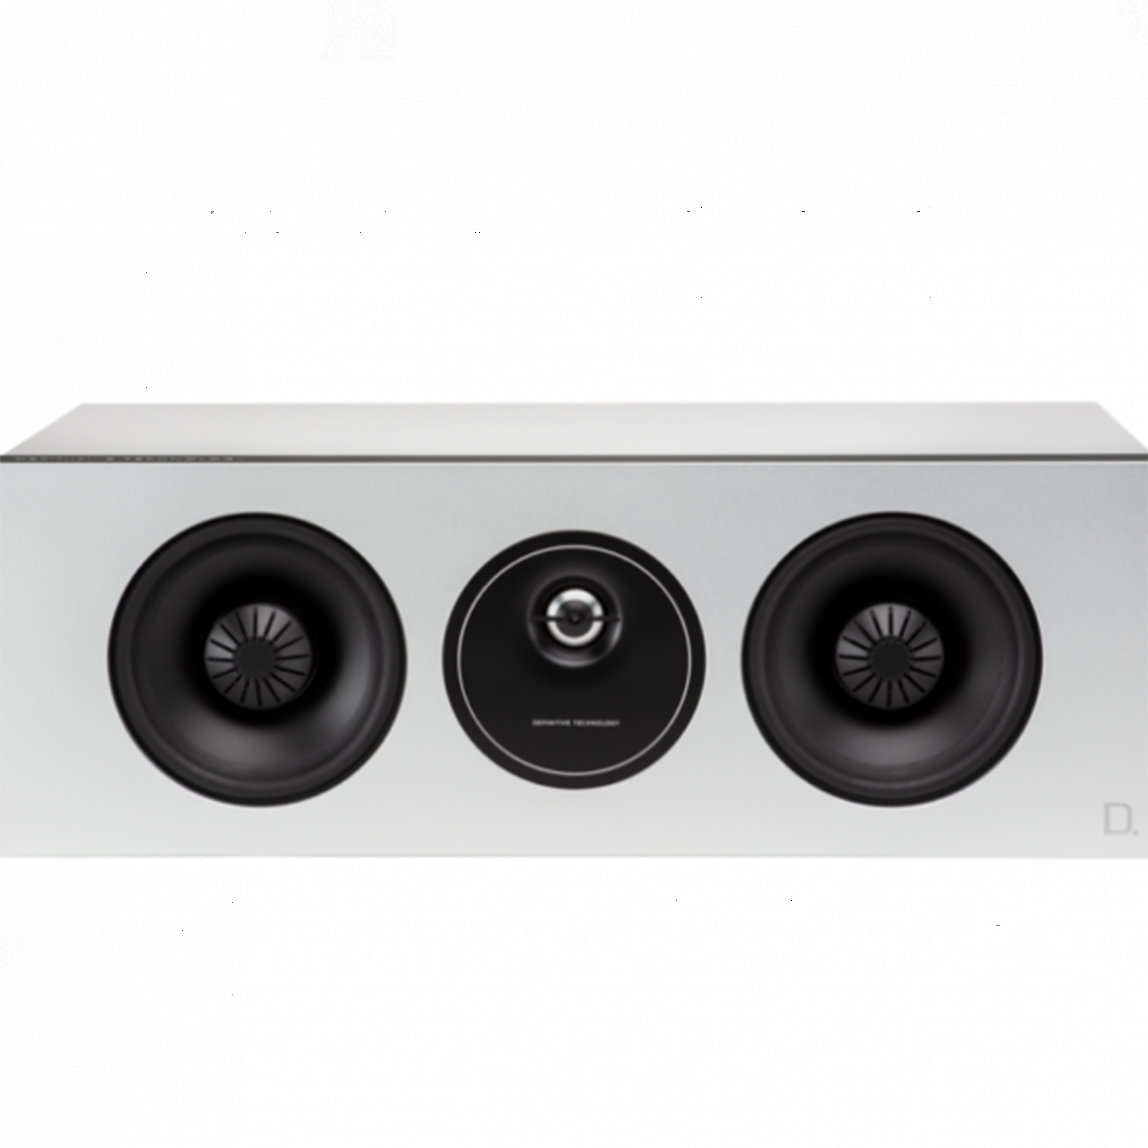 Definitive Technology D5C Demand Series High-Performance Centre Channel Speaker